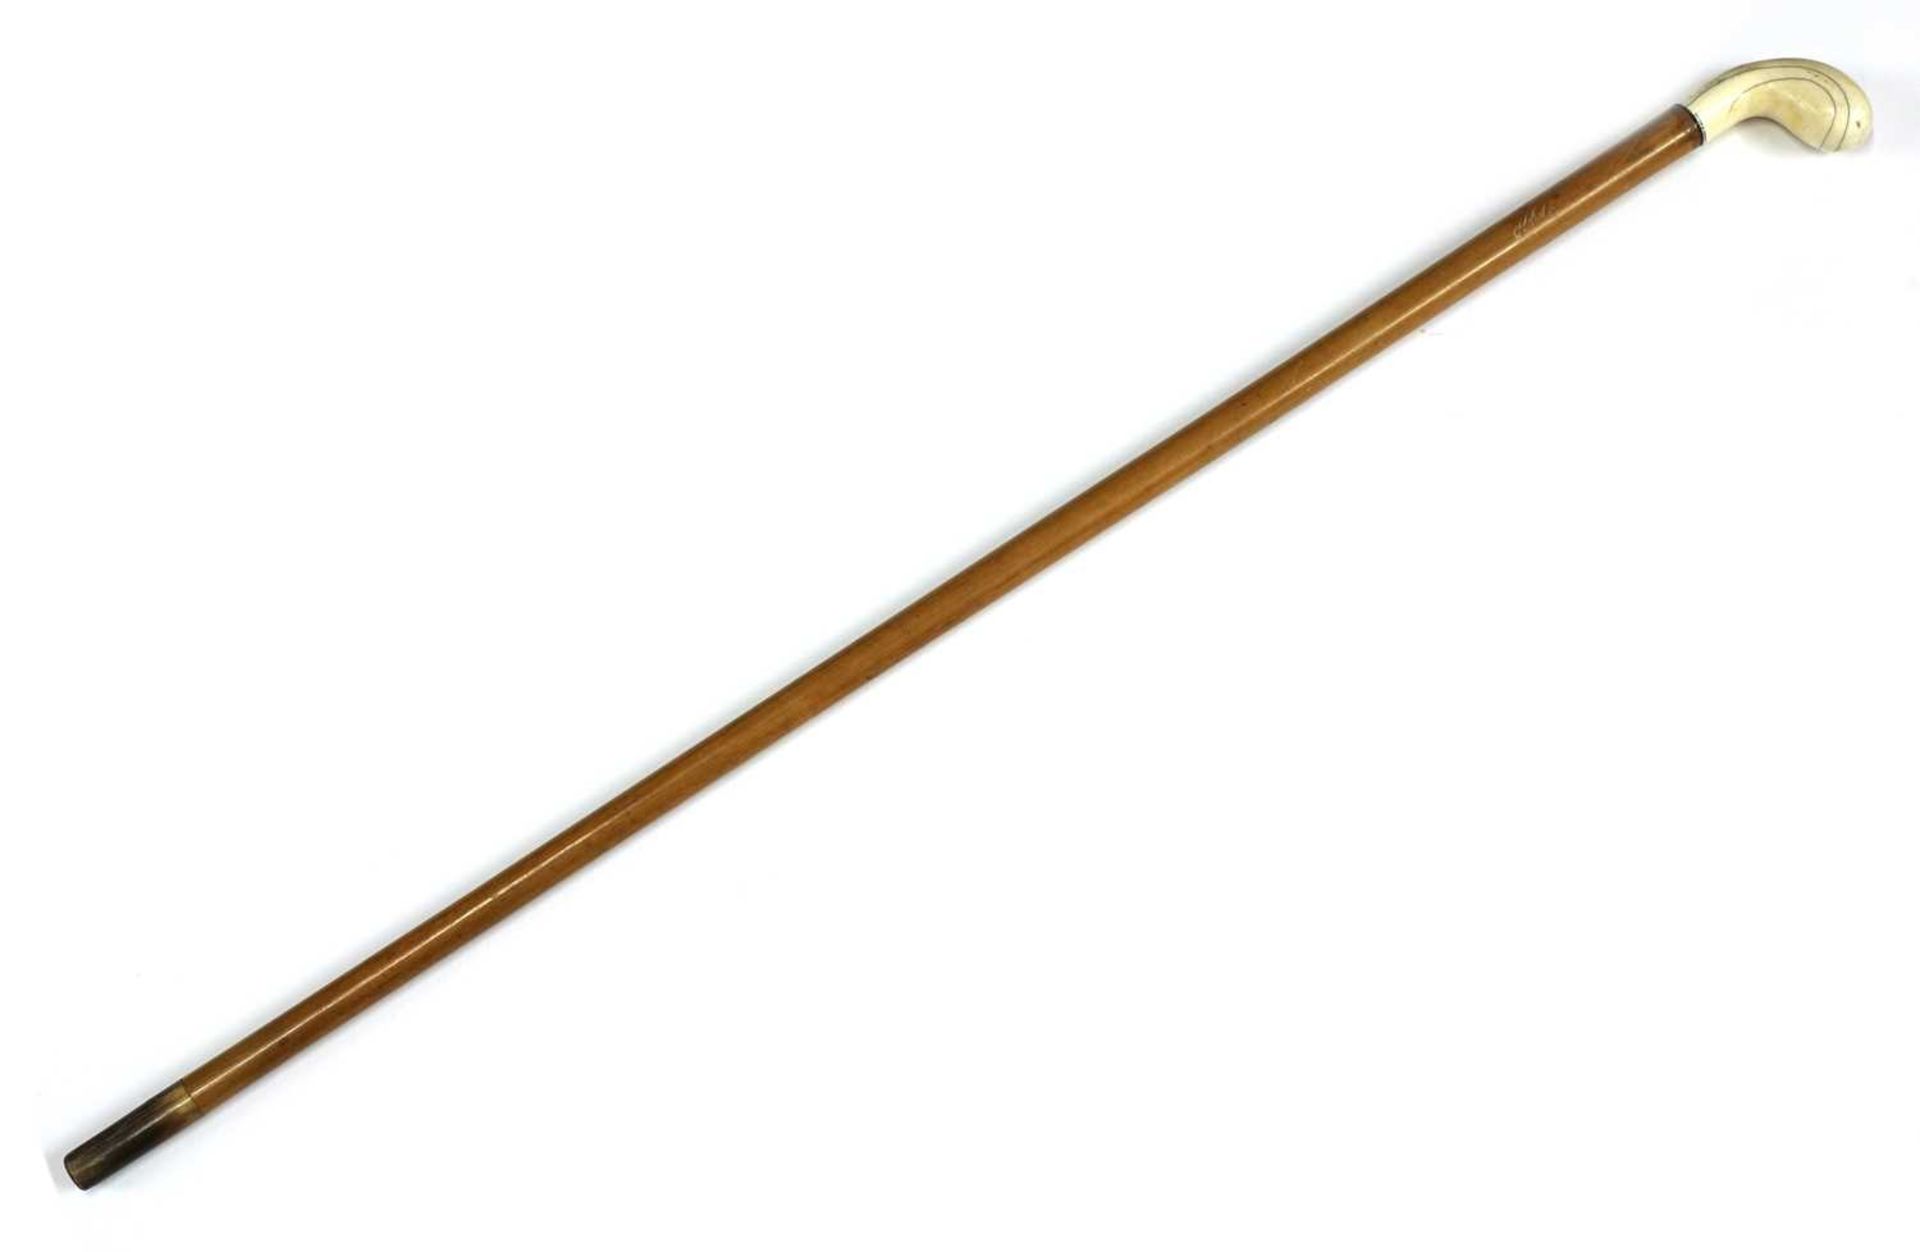 An ivory-handled walking stick,